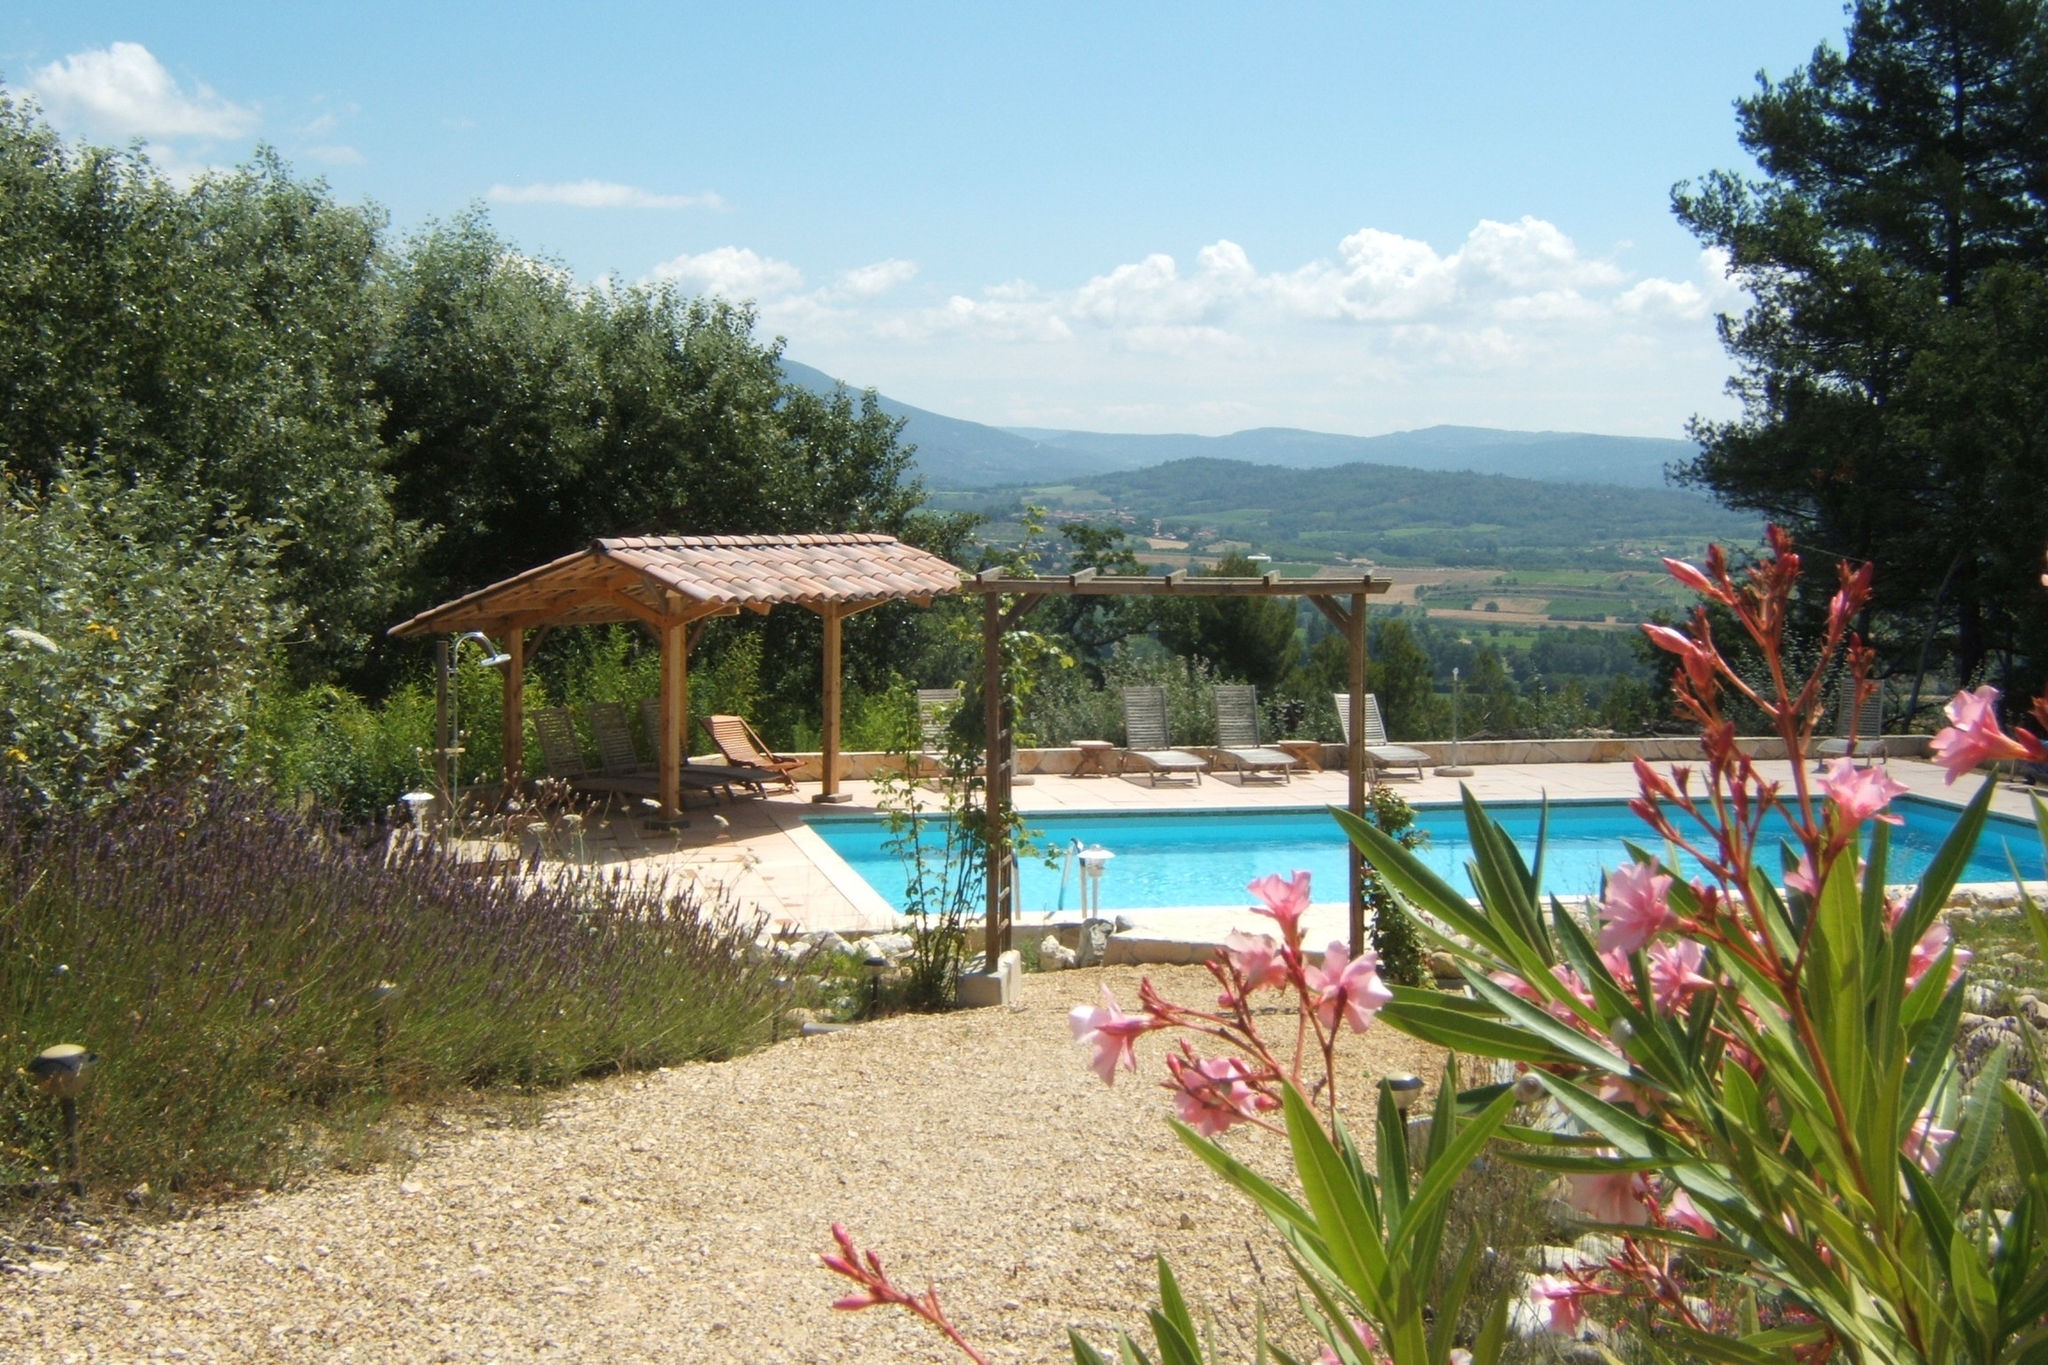 Vredige villa in Saint-Saturnin-lès-Apt met verwarmd prive zwembad